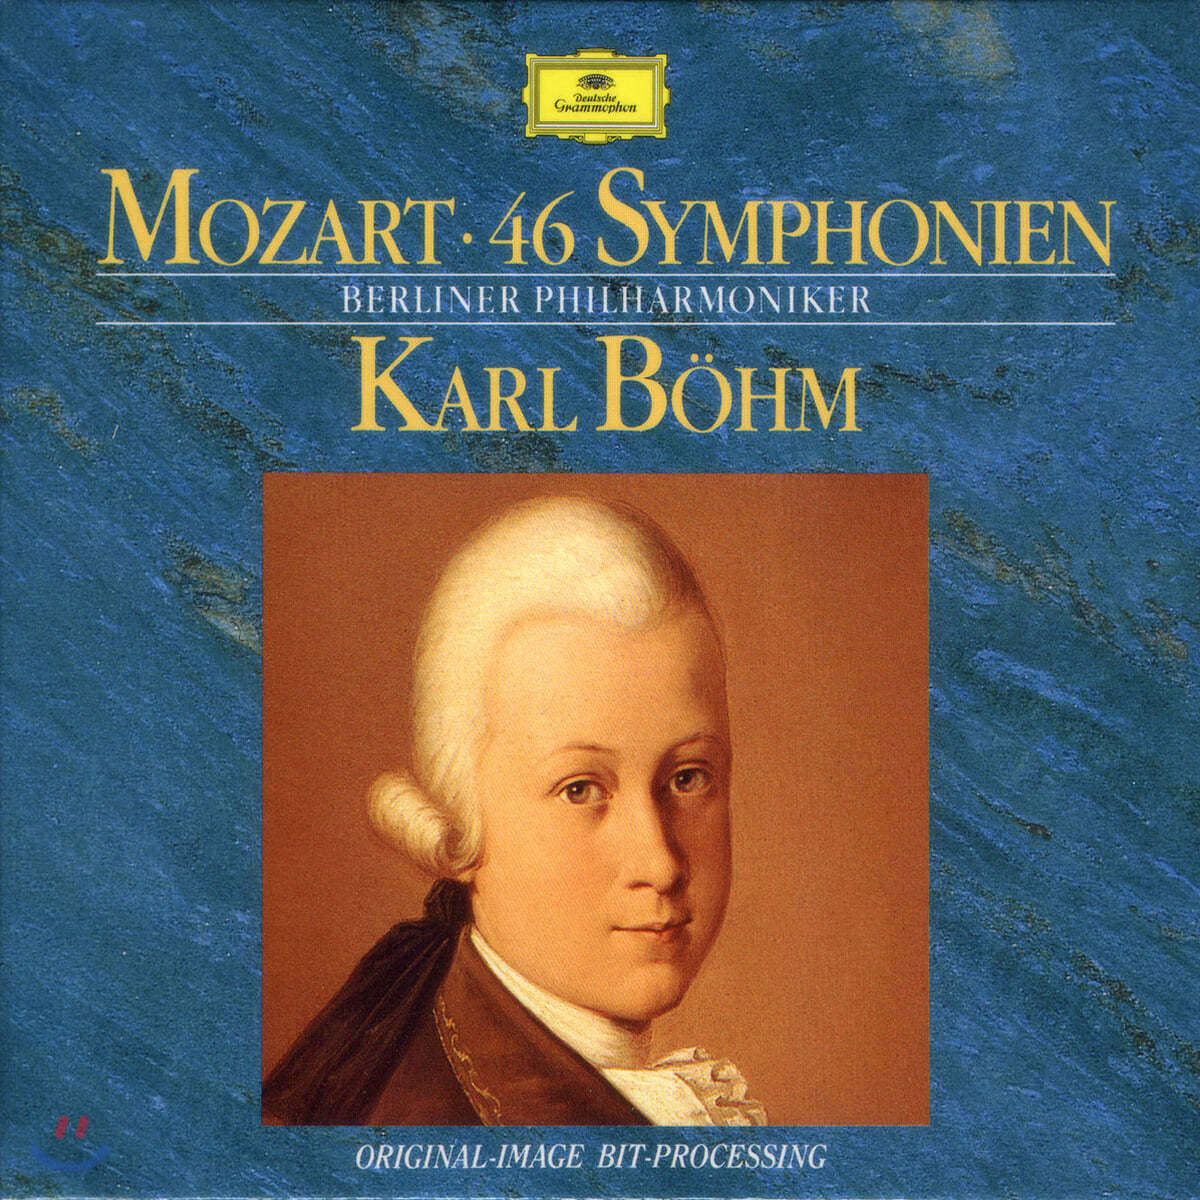 Karl Bohm 모차르트: 교향곡 전곡집 - 칼 뵘 (Mozart : 46 Symphony)